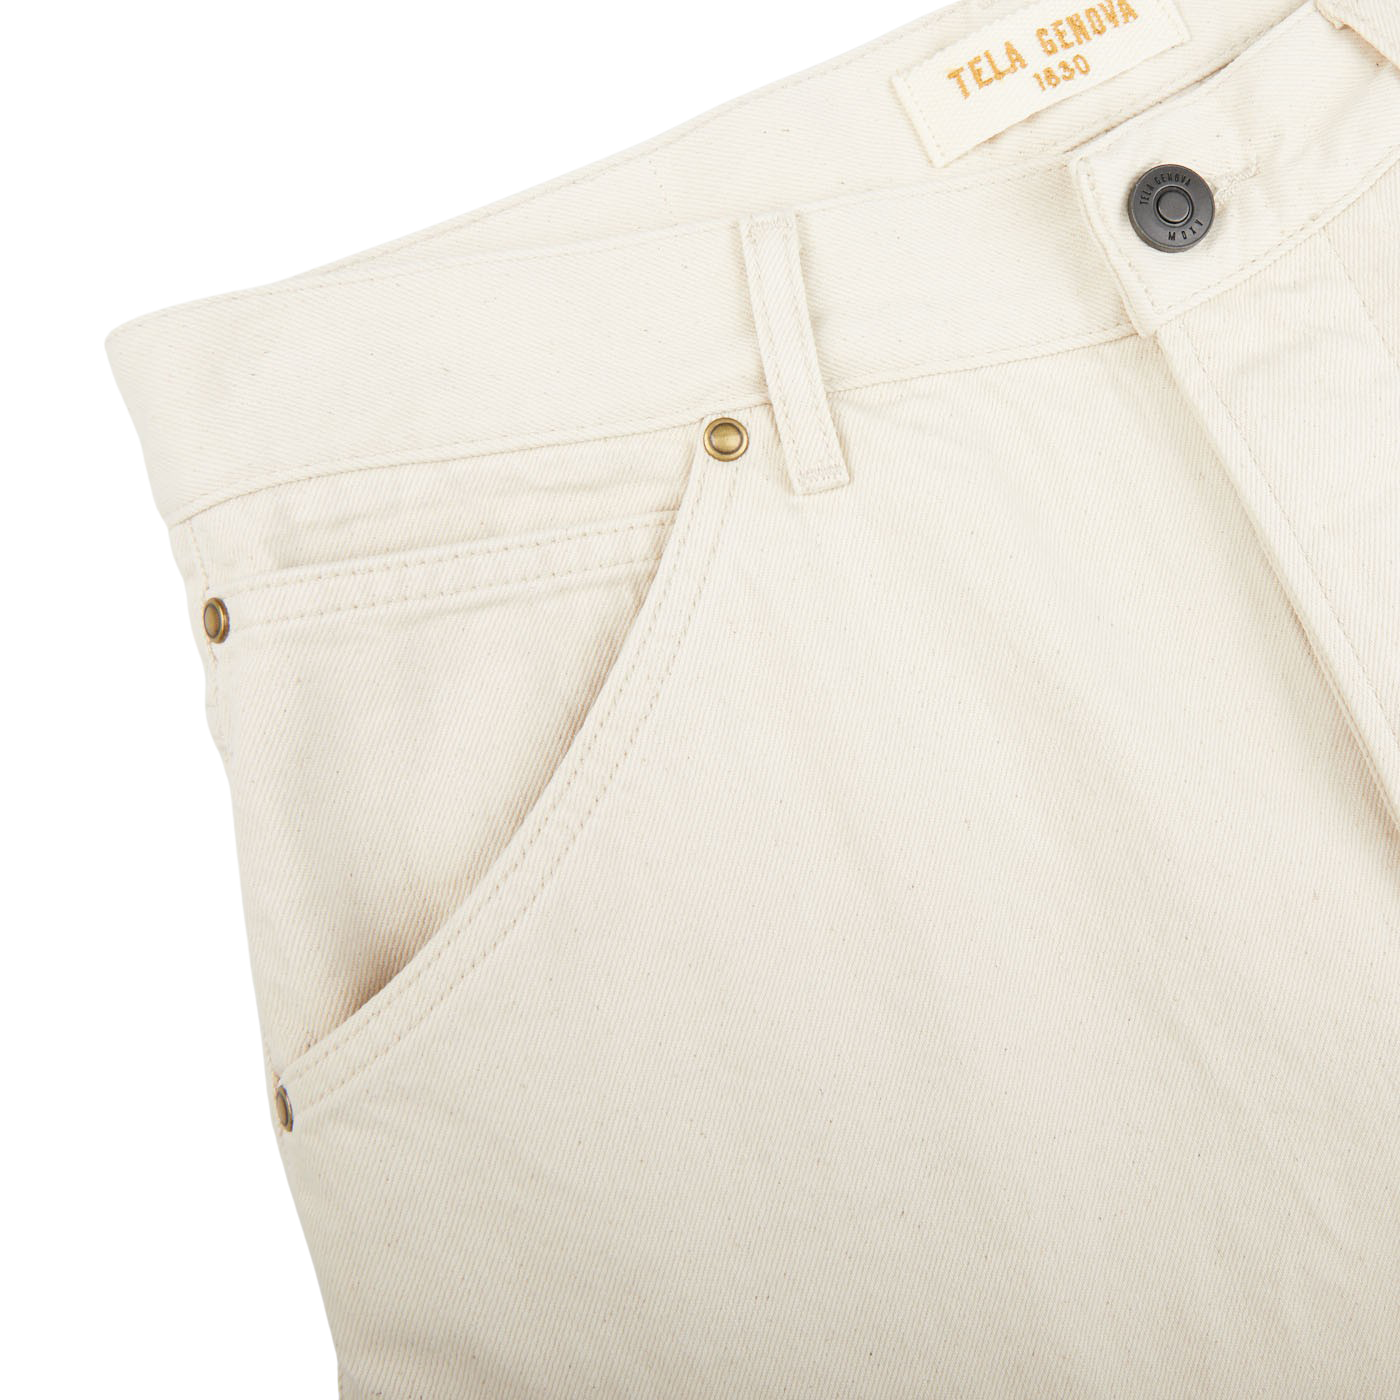 Tela Genova Natural Beige Cotton Selvedge Jeans Edge